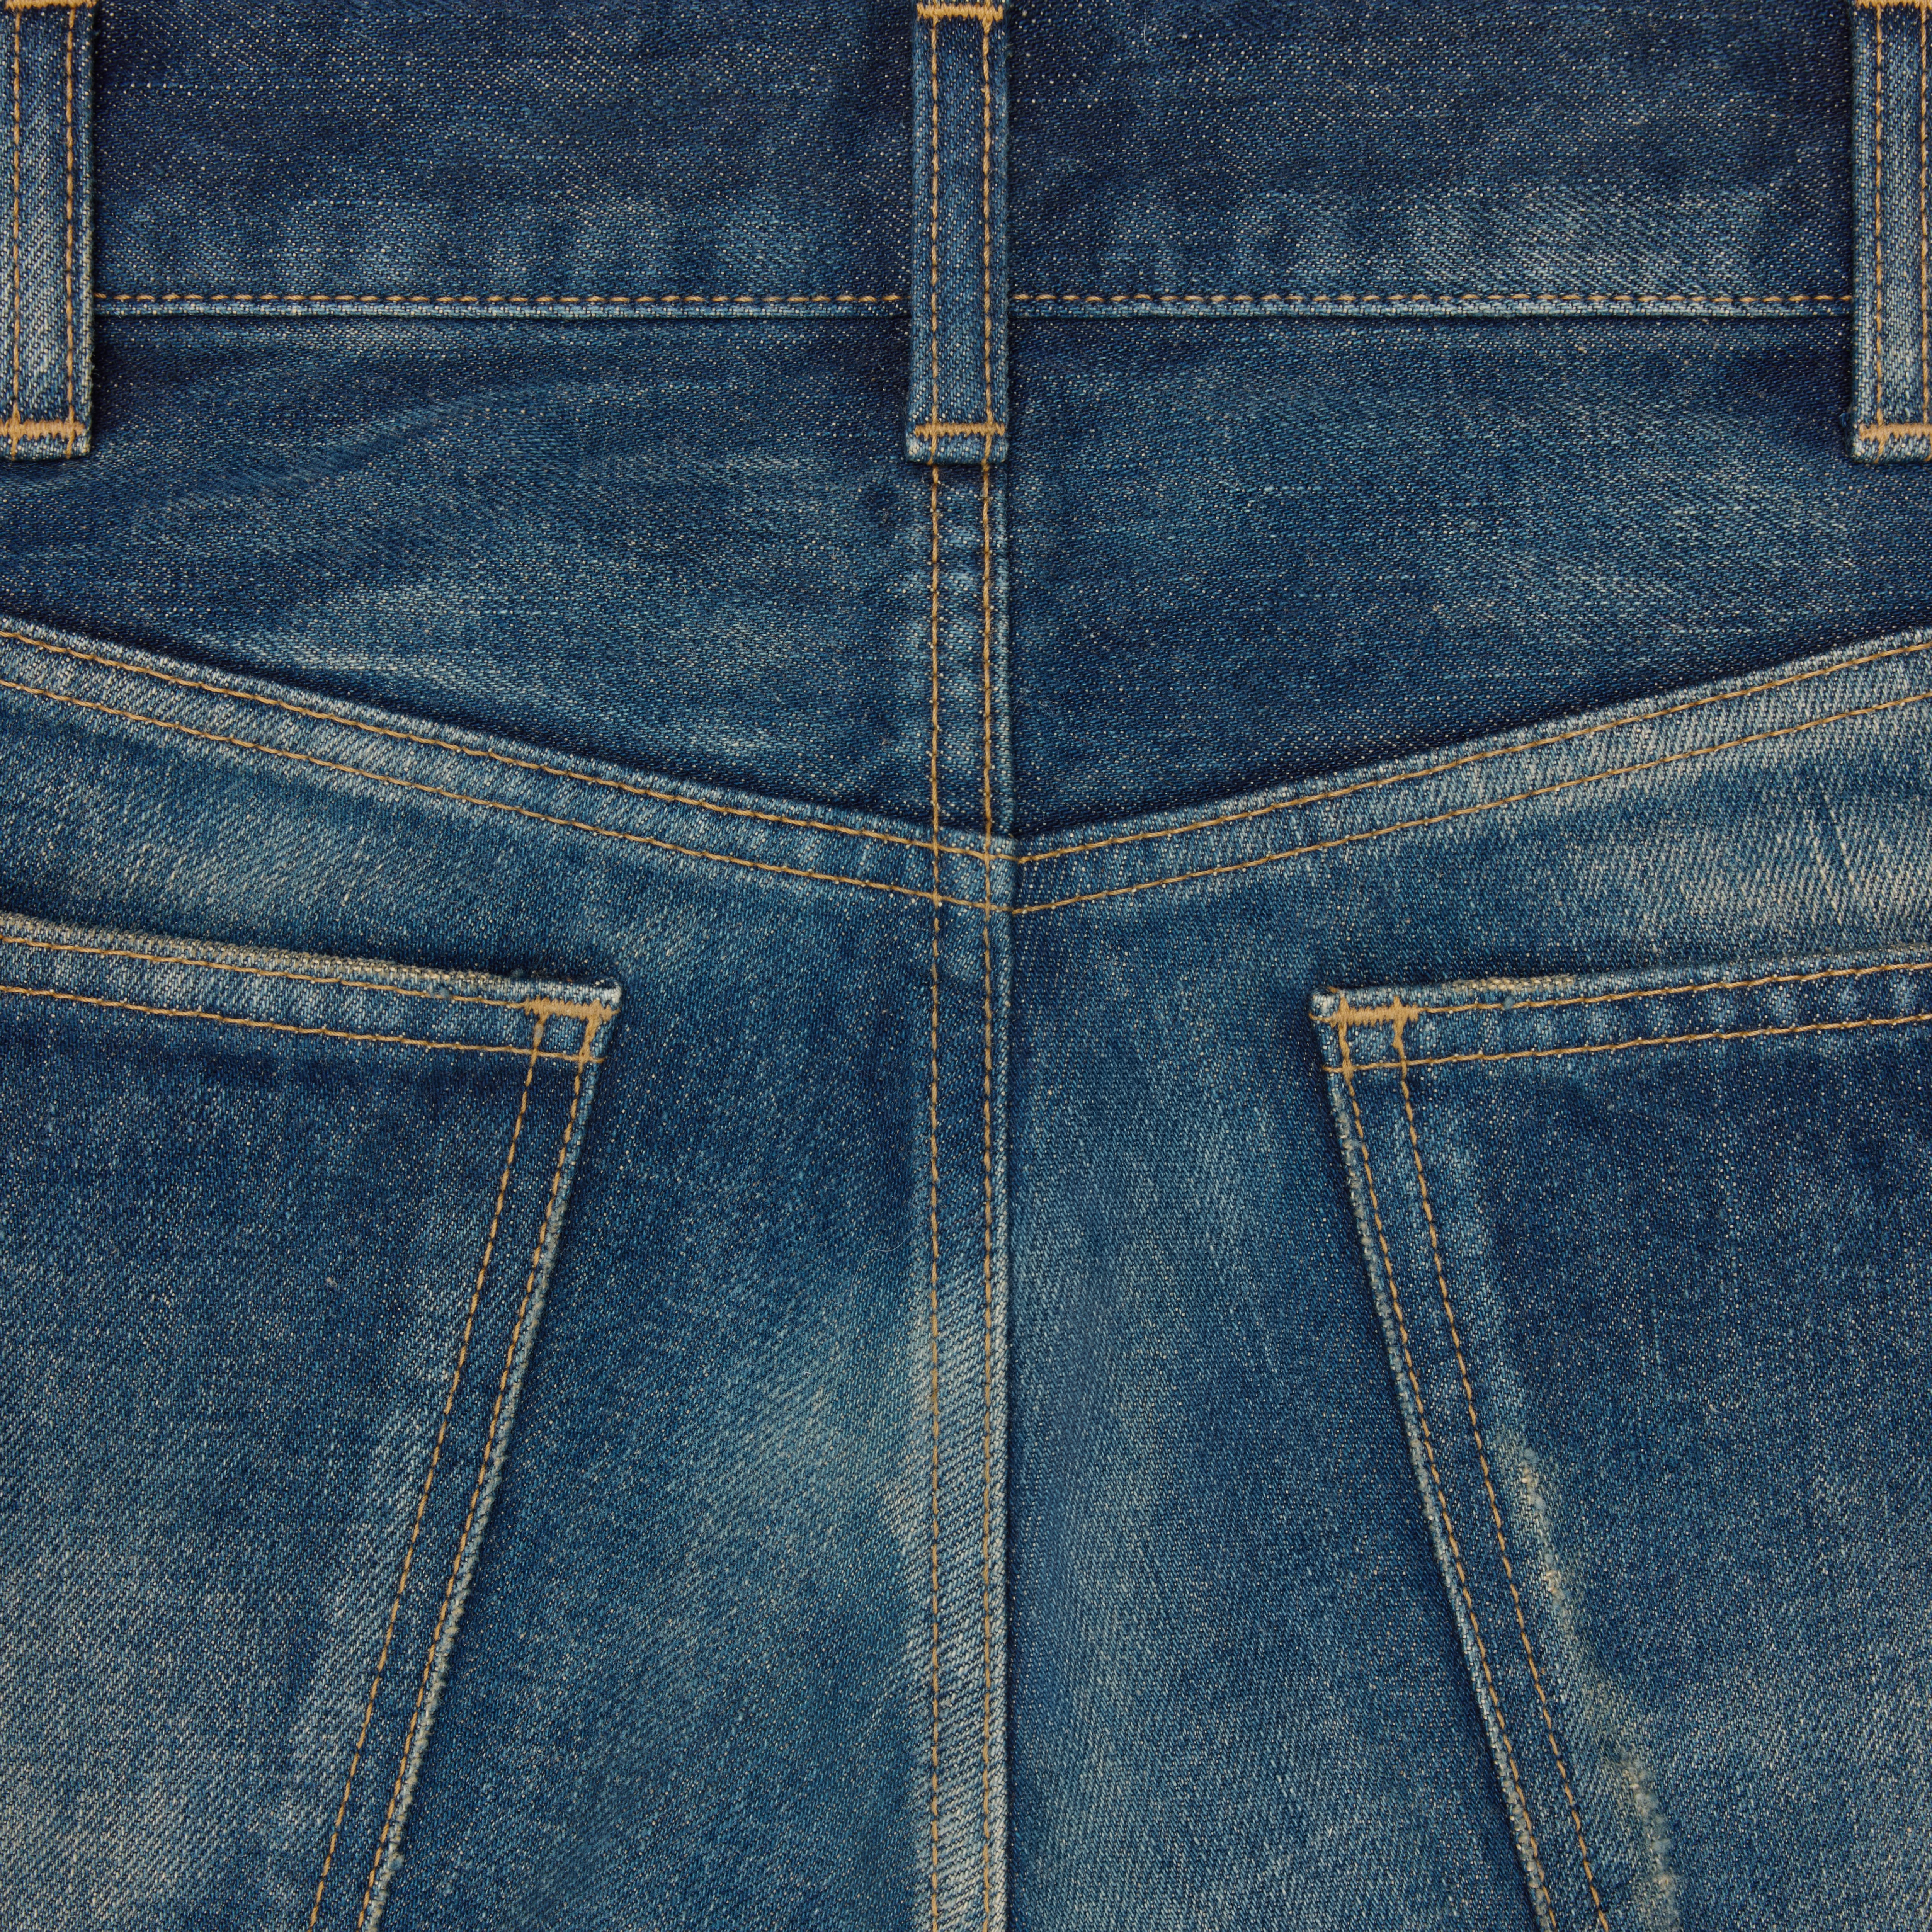 kurt jeans in destroyed blue marble denim - 3